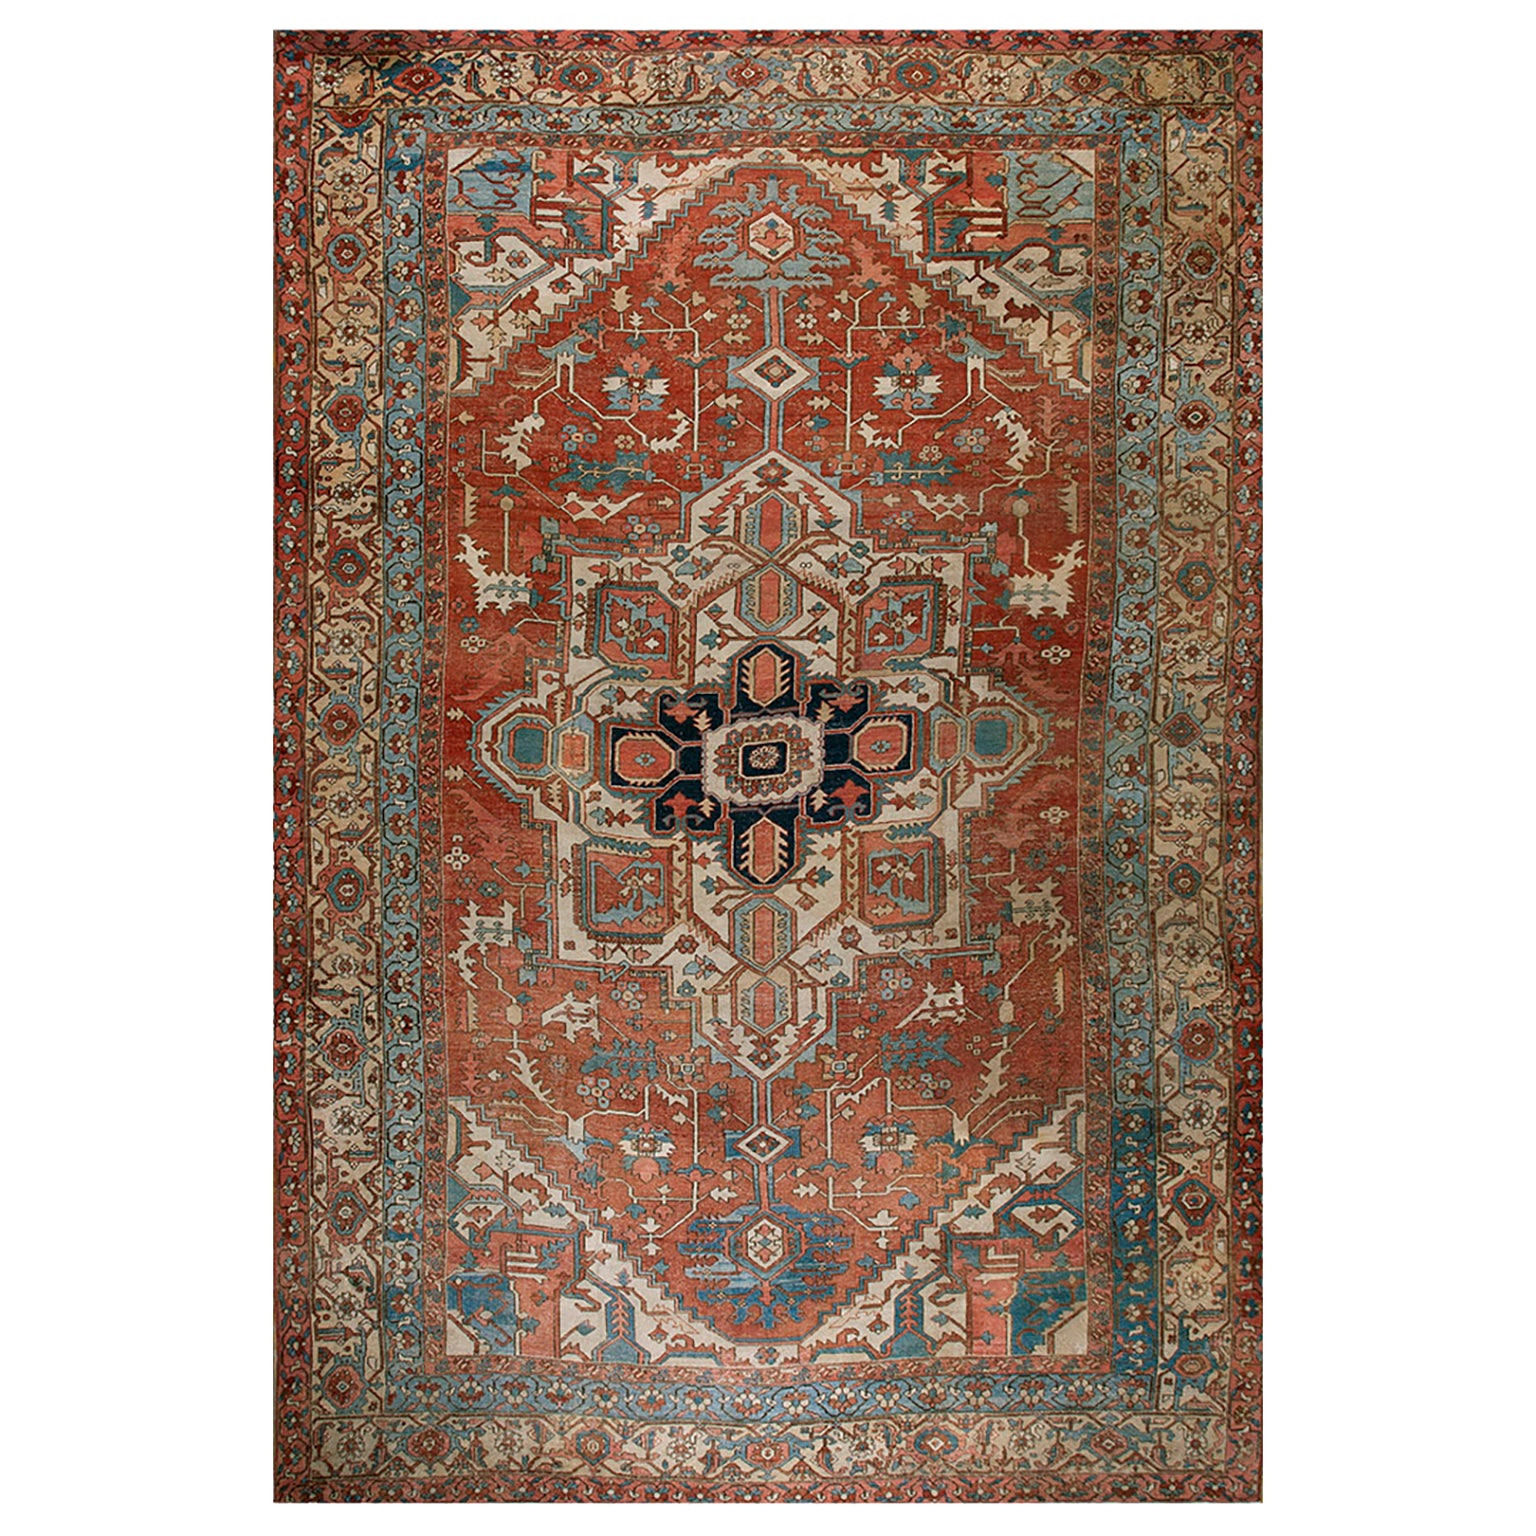 Late 19th Century Persian Serapi Carpet ( 12' x 18' - 366 x 548 cm )